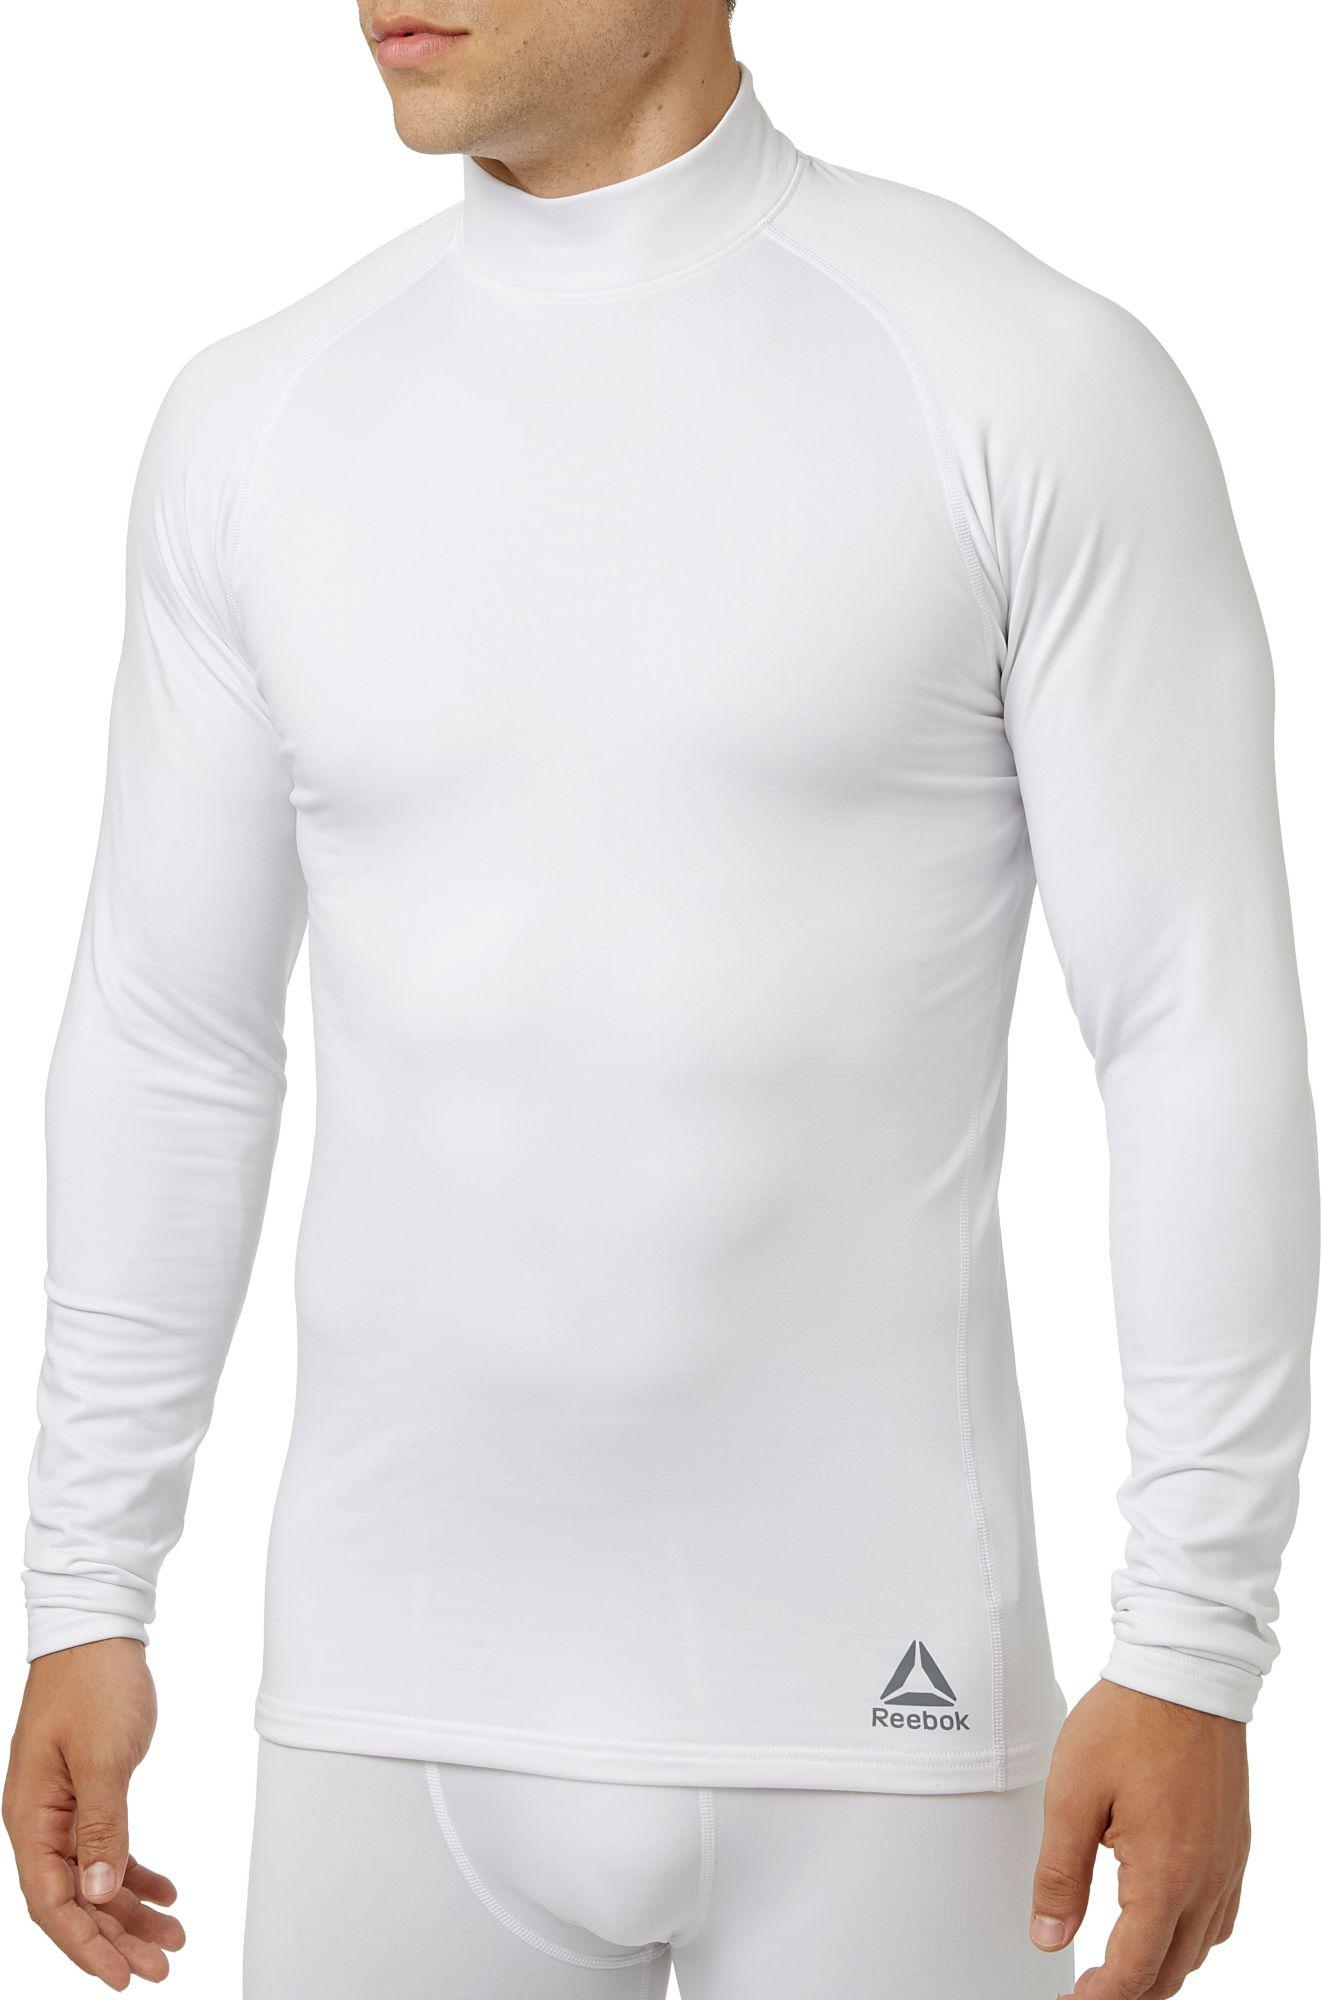 reebok men's cold weather compression novelty long sleeve shirt